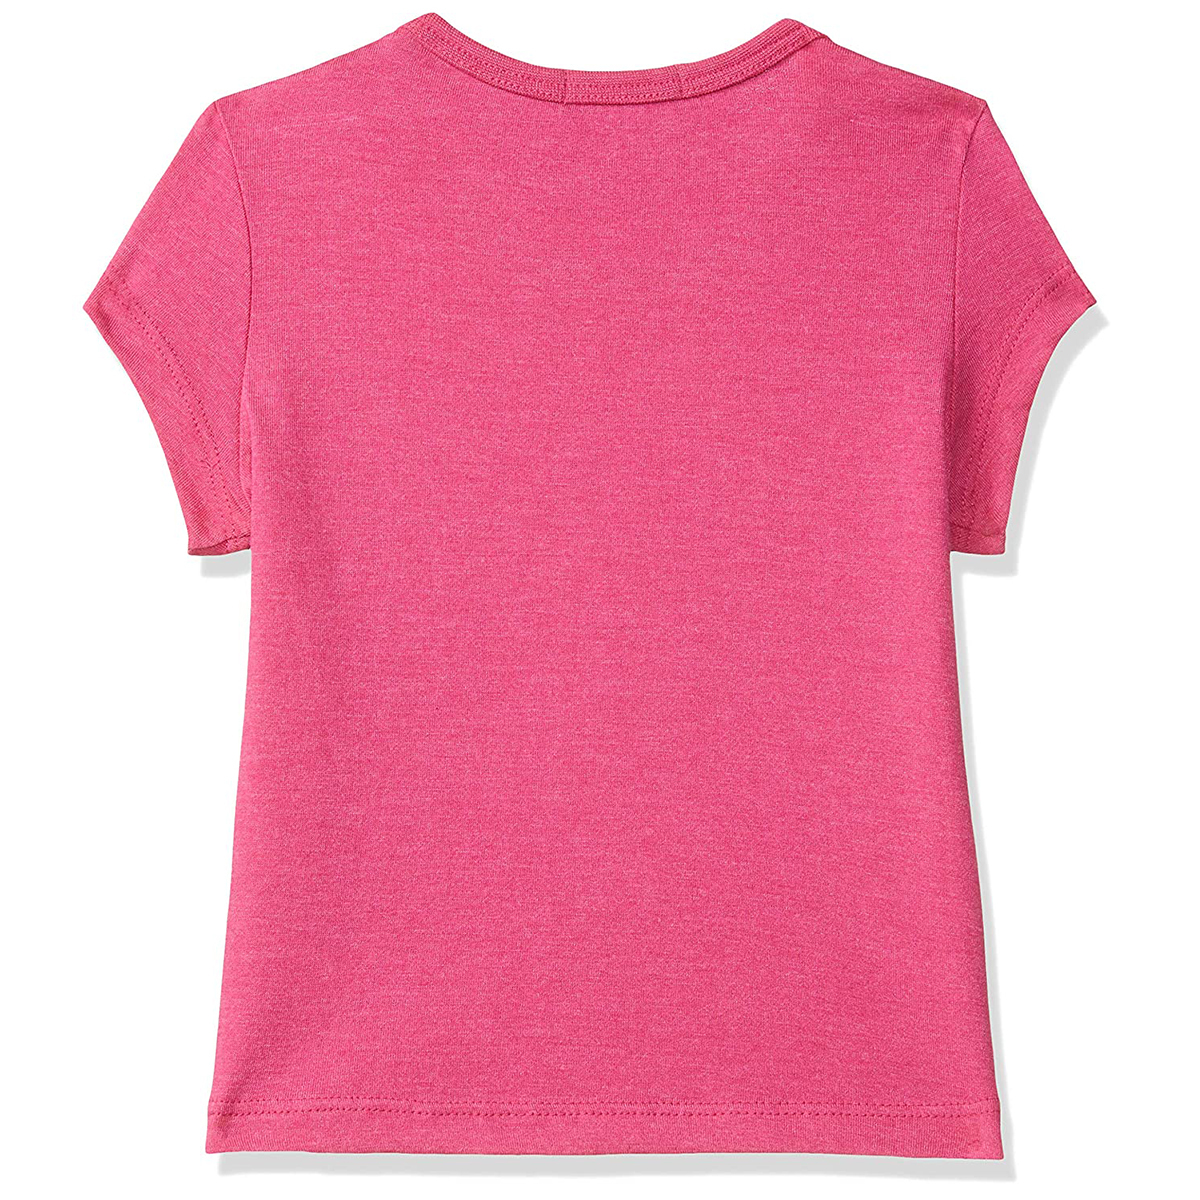 United Colors of Benetton Baby-Girl's Regular T-Shirt- Pink